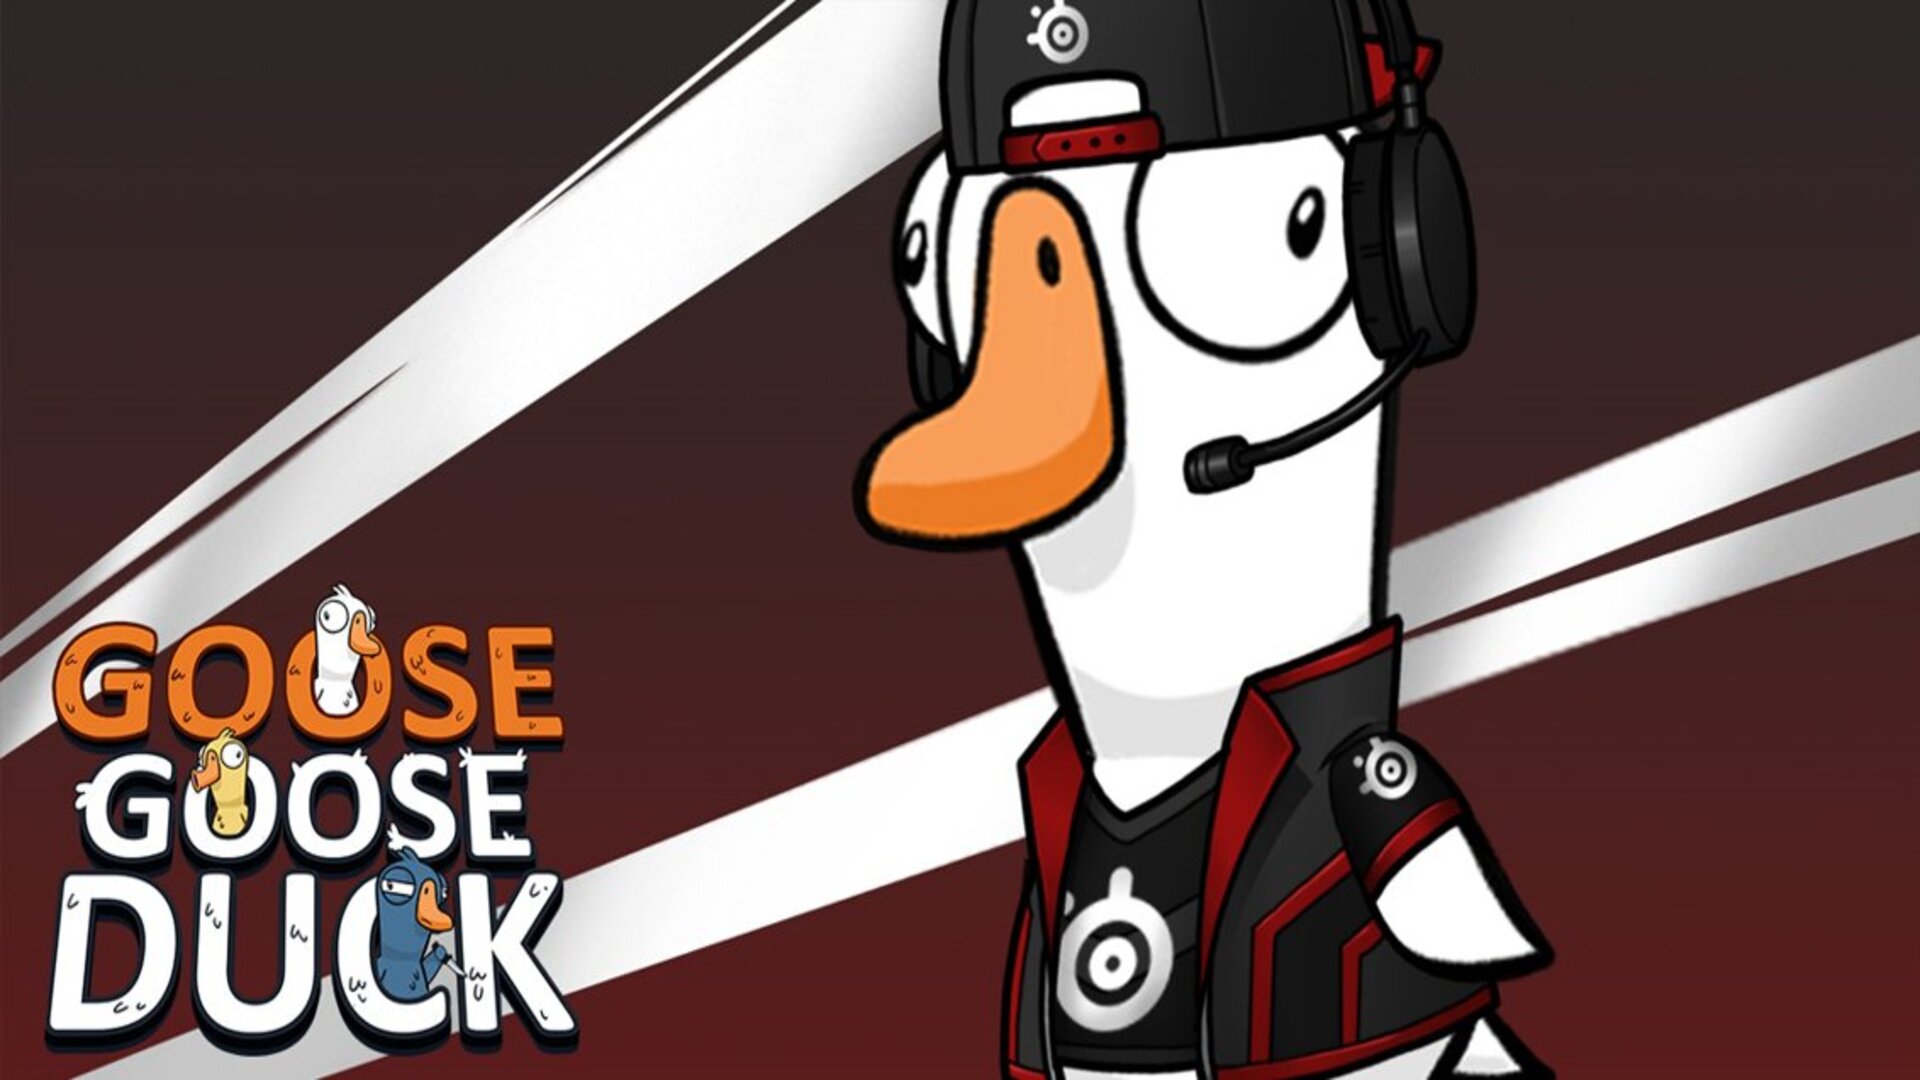 Goose Goose Duck - Steelseries Outfit Pack Digital Download CD Key 3.79 $